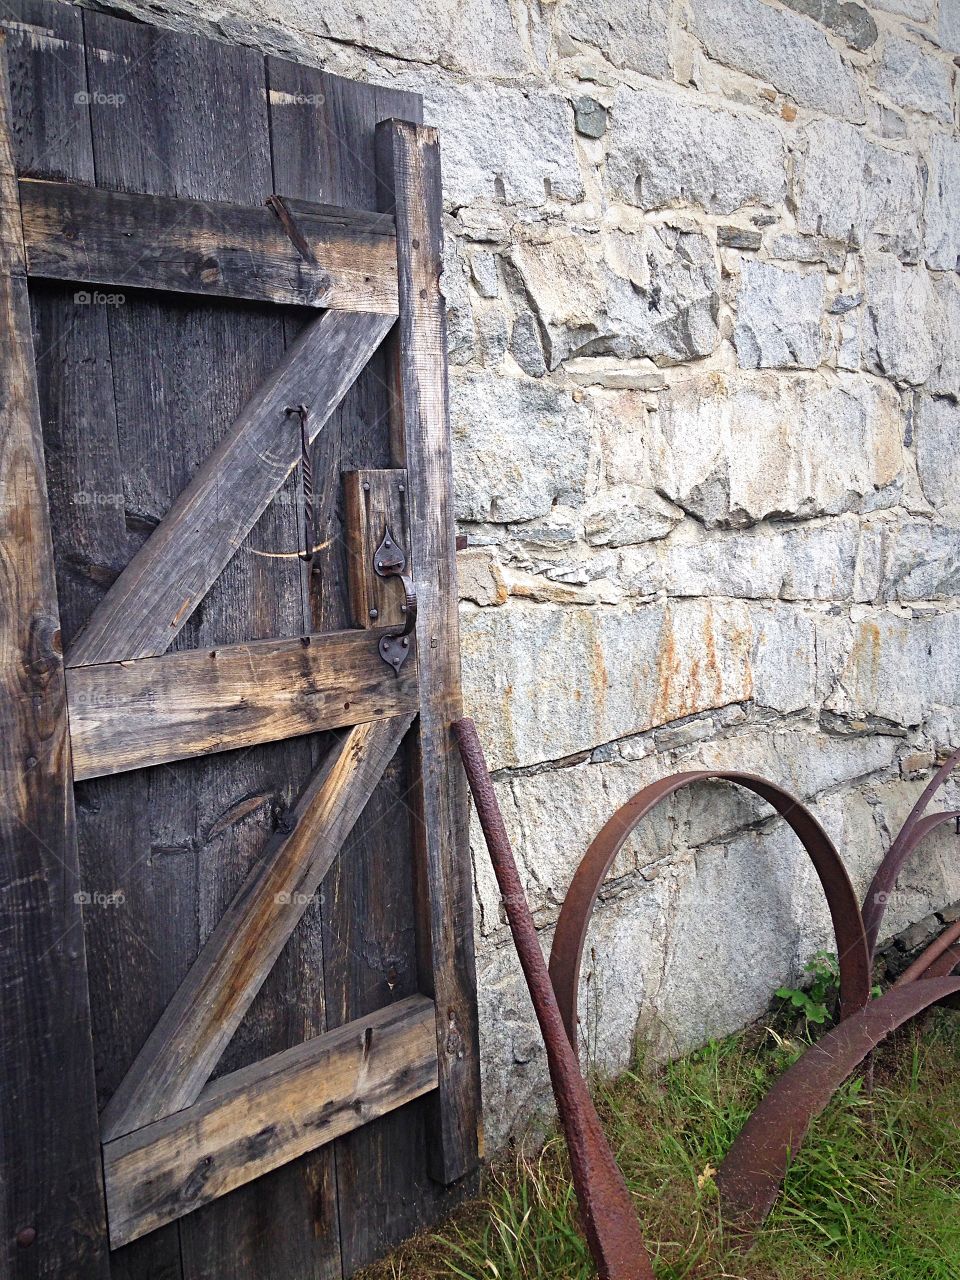 Back door to the blacksmiths shop.  Old Sturbridge Village a living museum in Massachusetts. 
